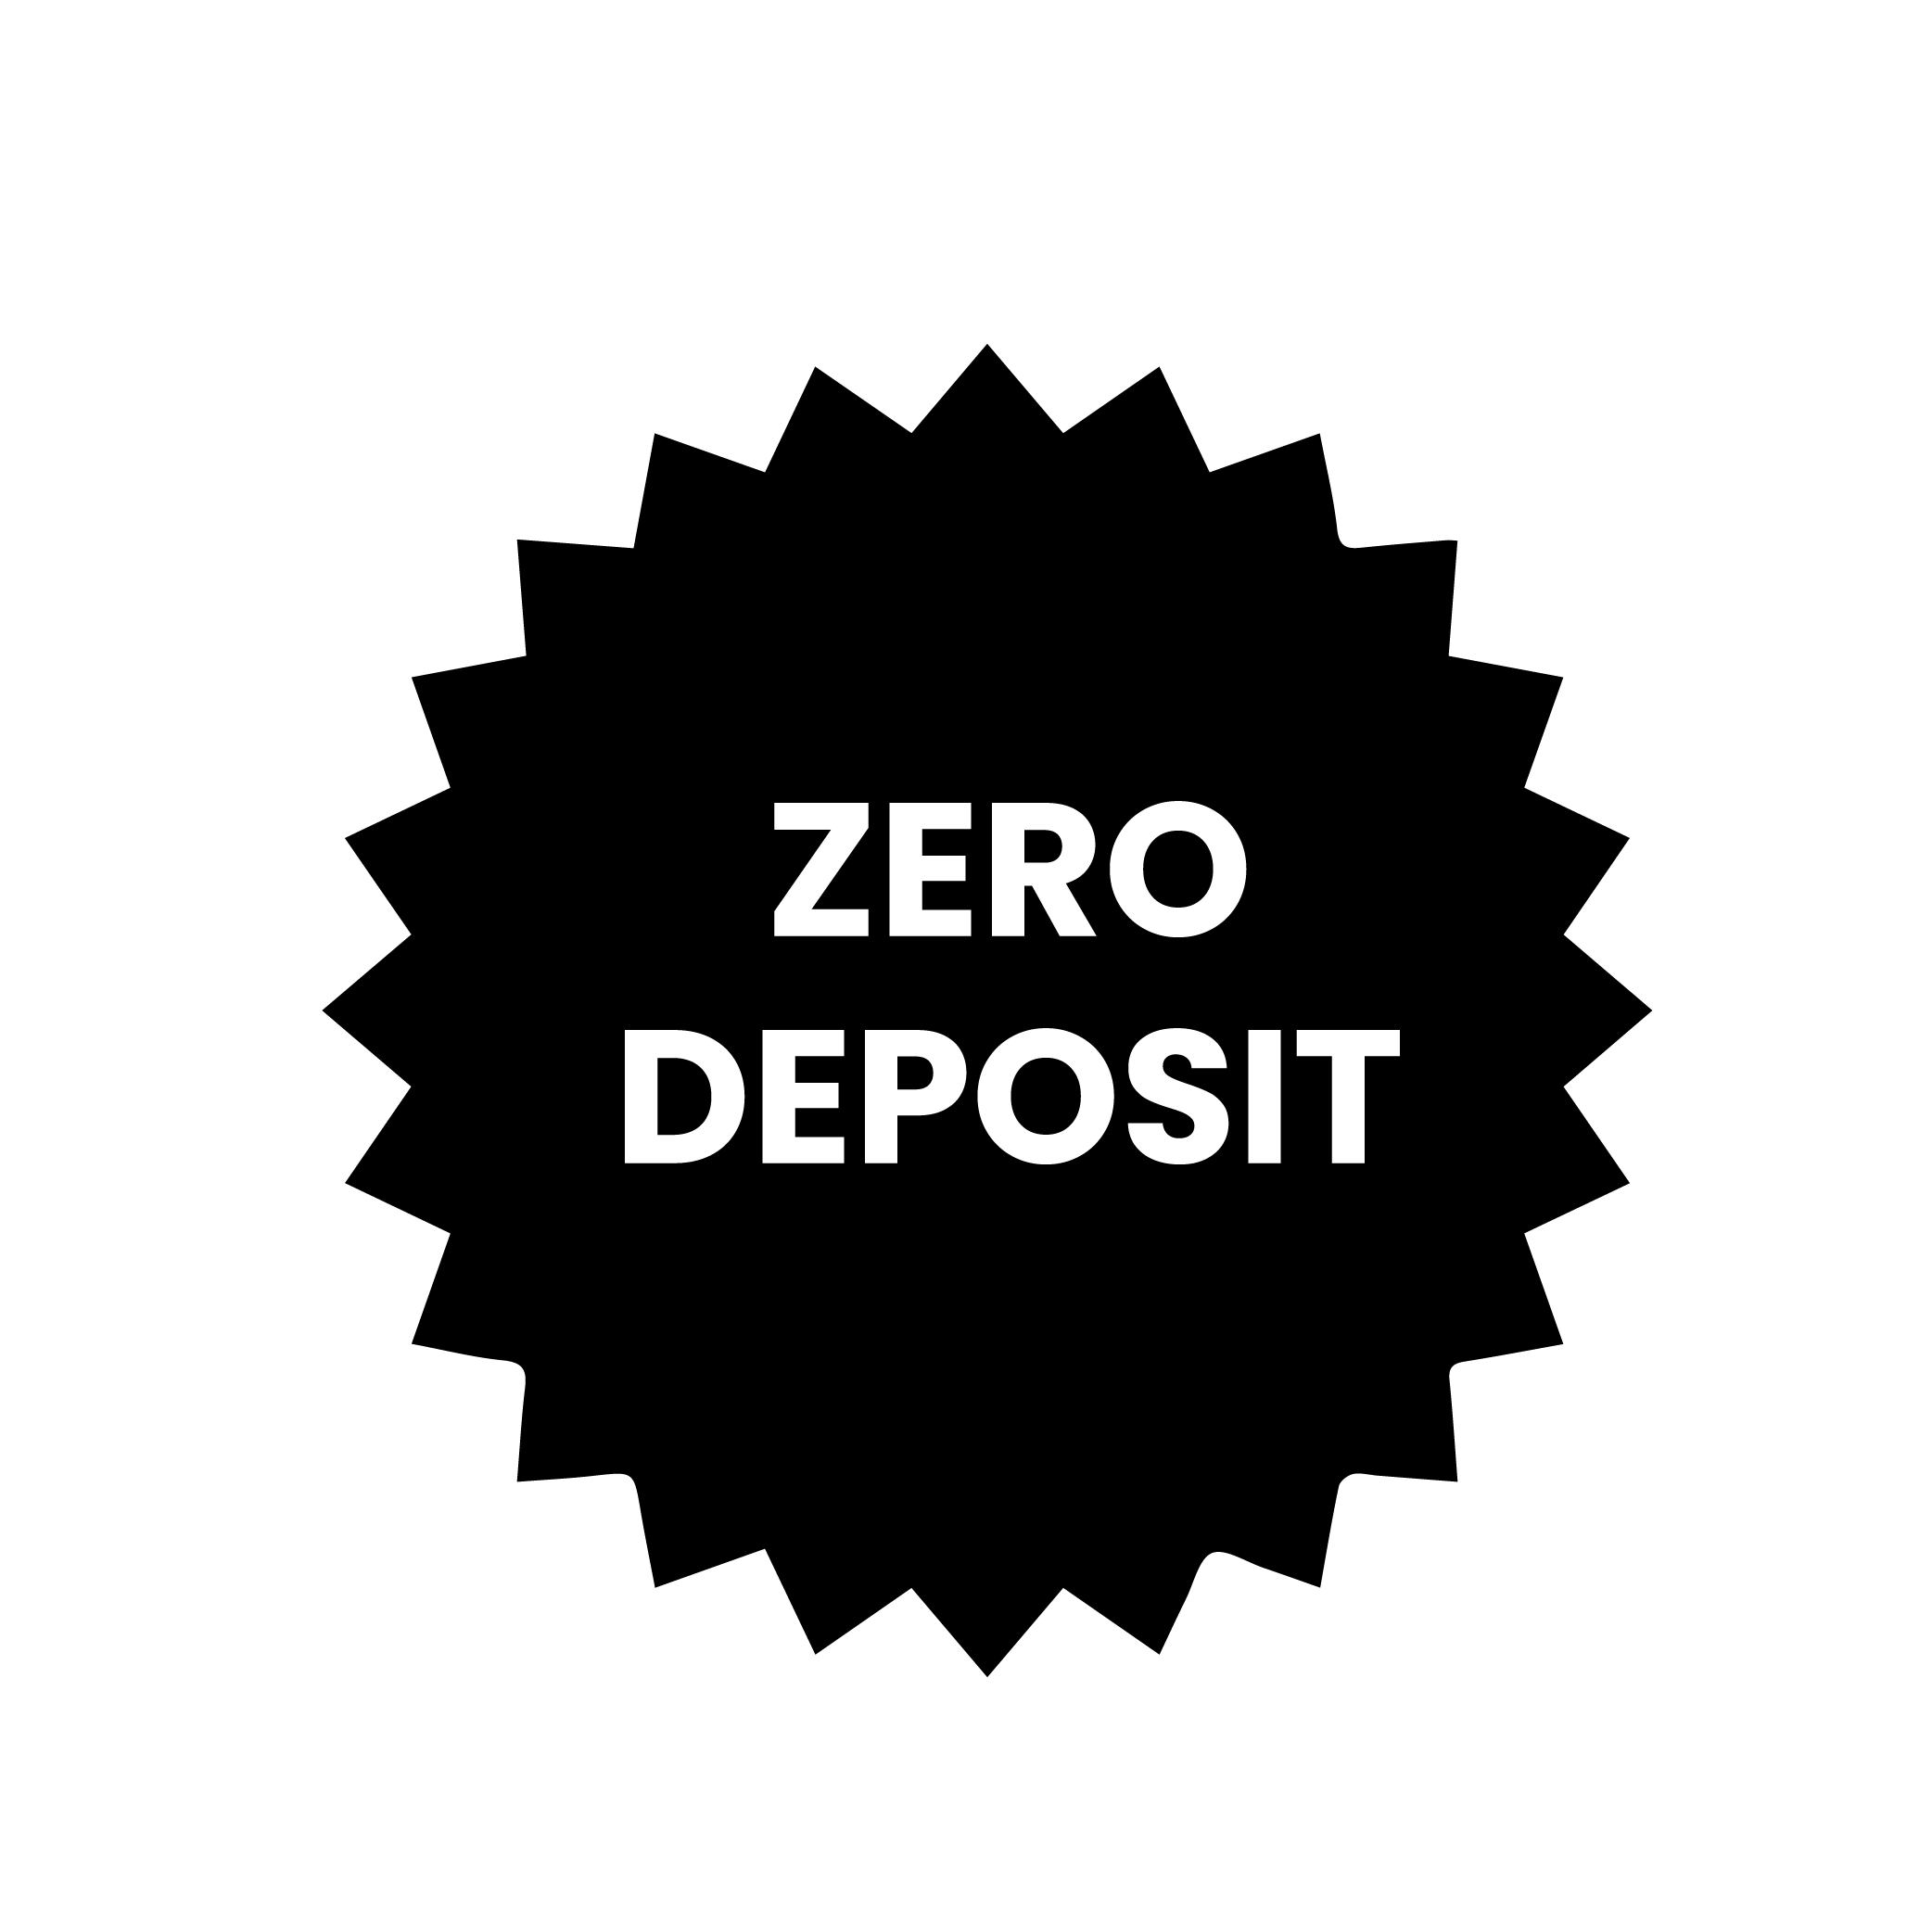 Zero Deposit Img